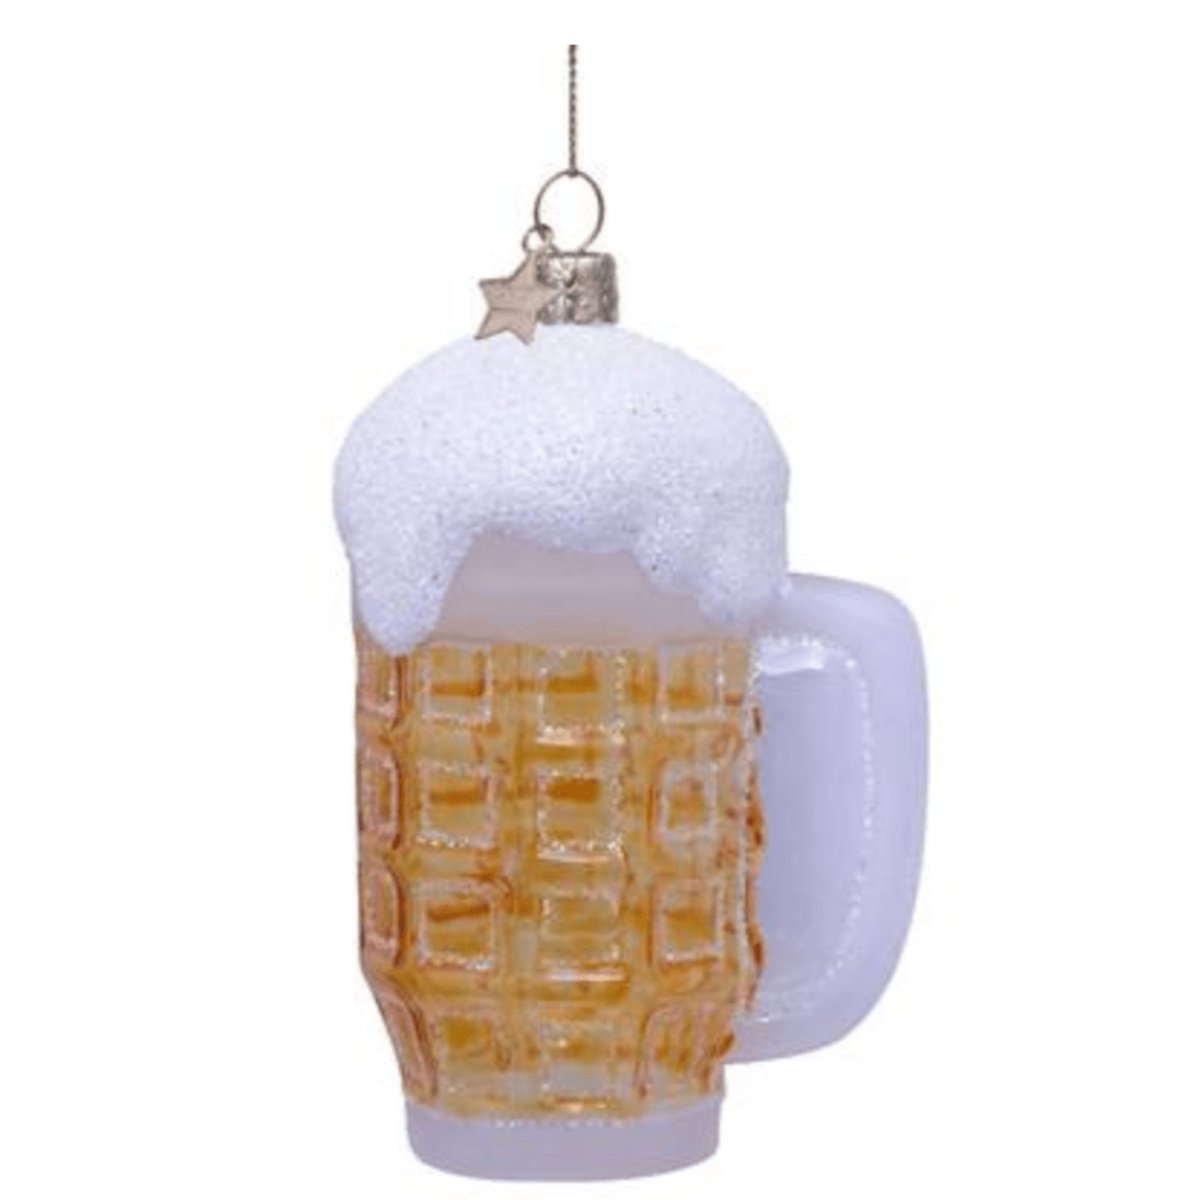 Vondels - Christmas Ornament // Beer Glass - Ornaments - DANSKmadeforrooms